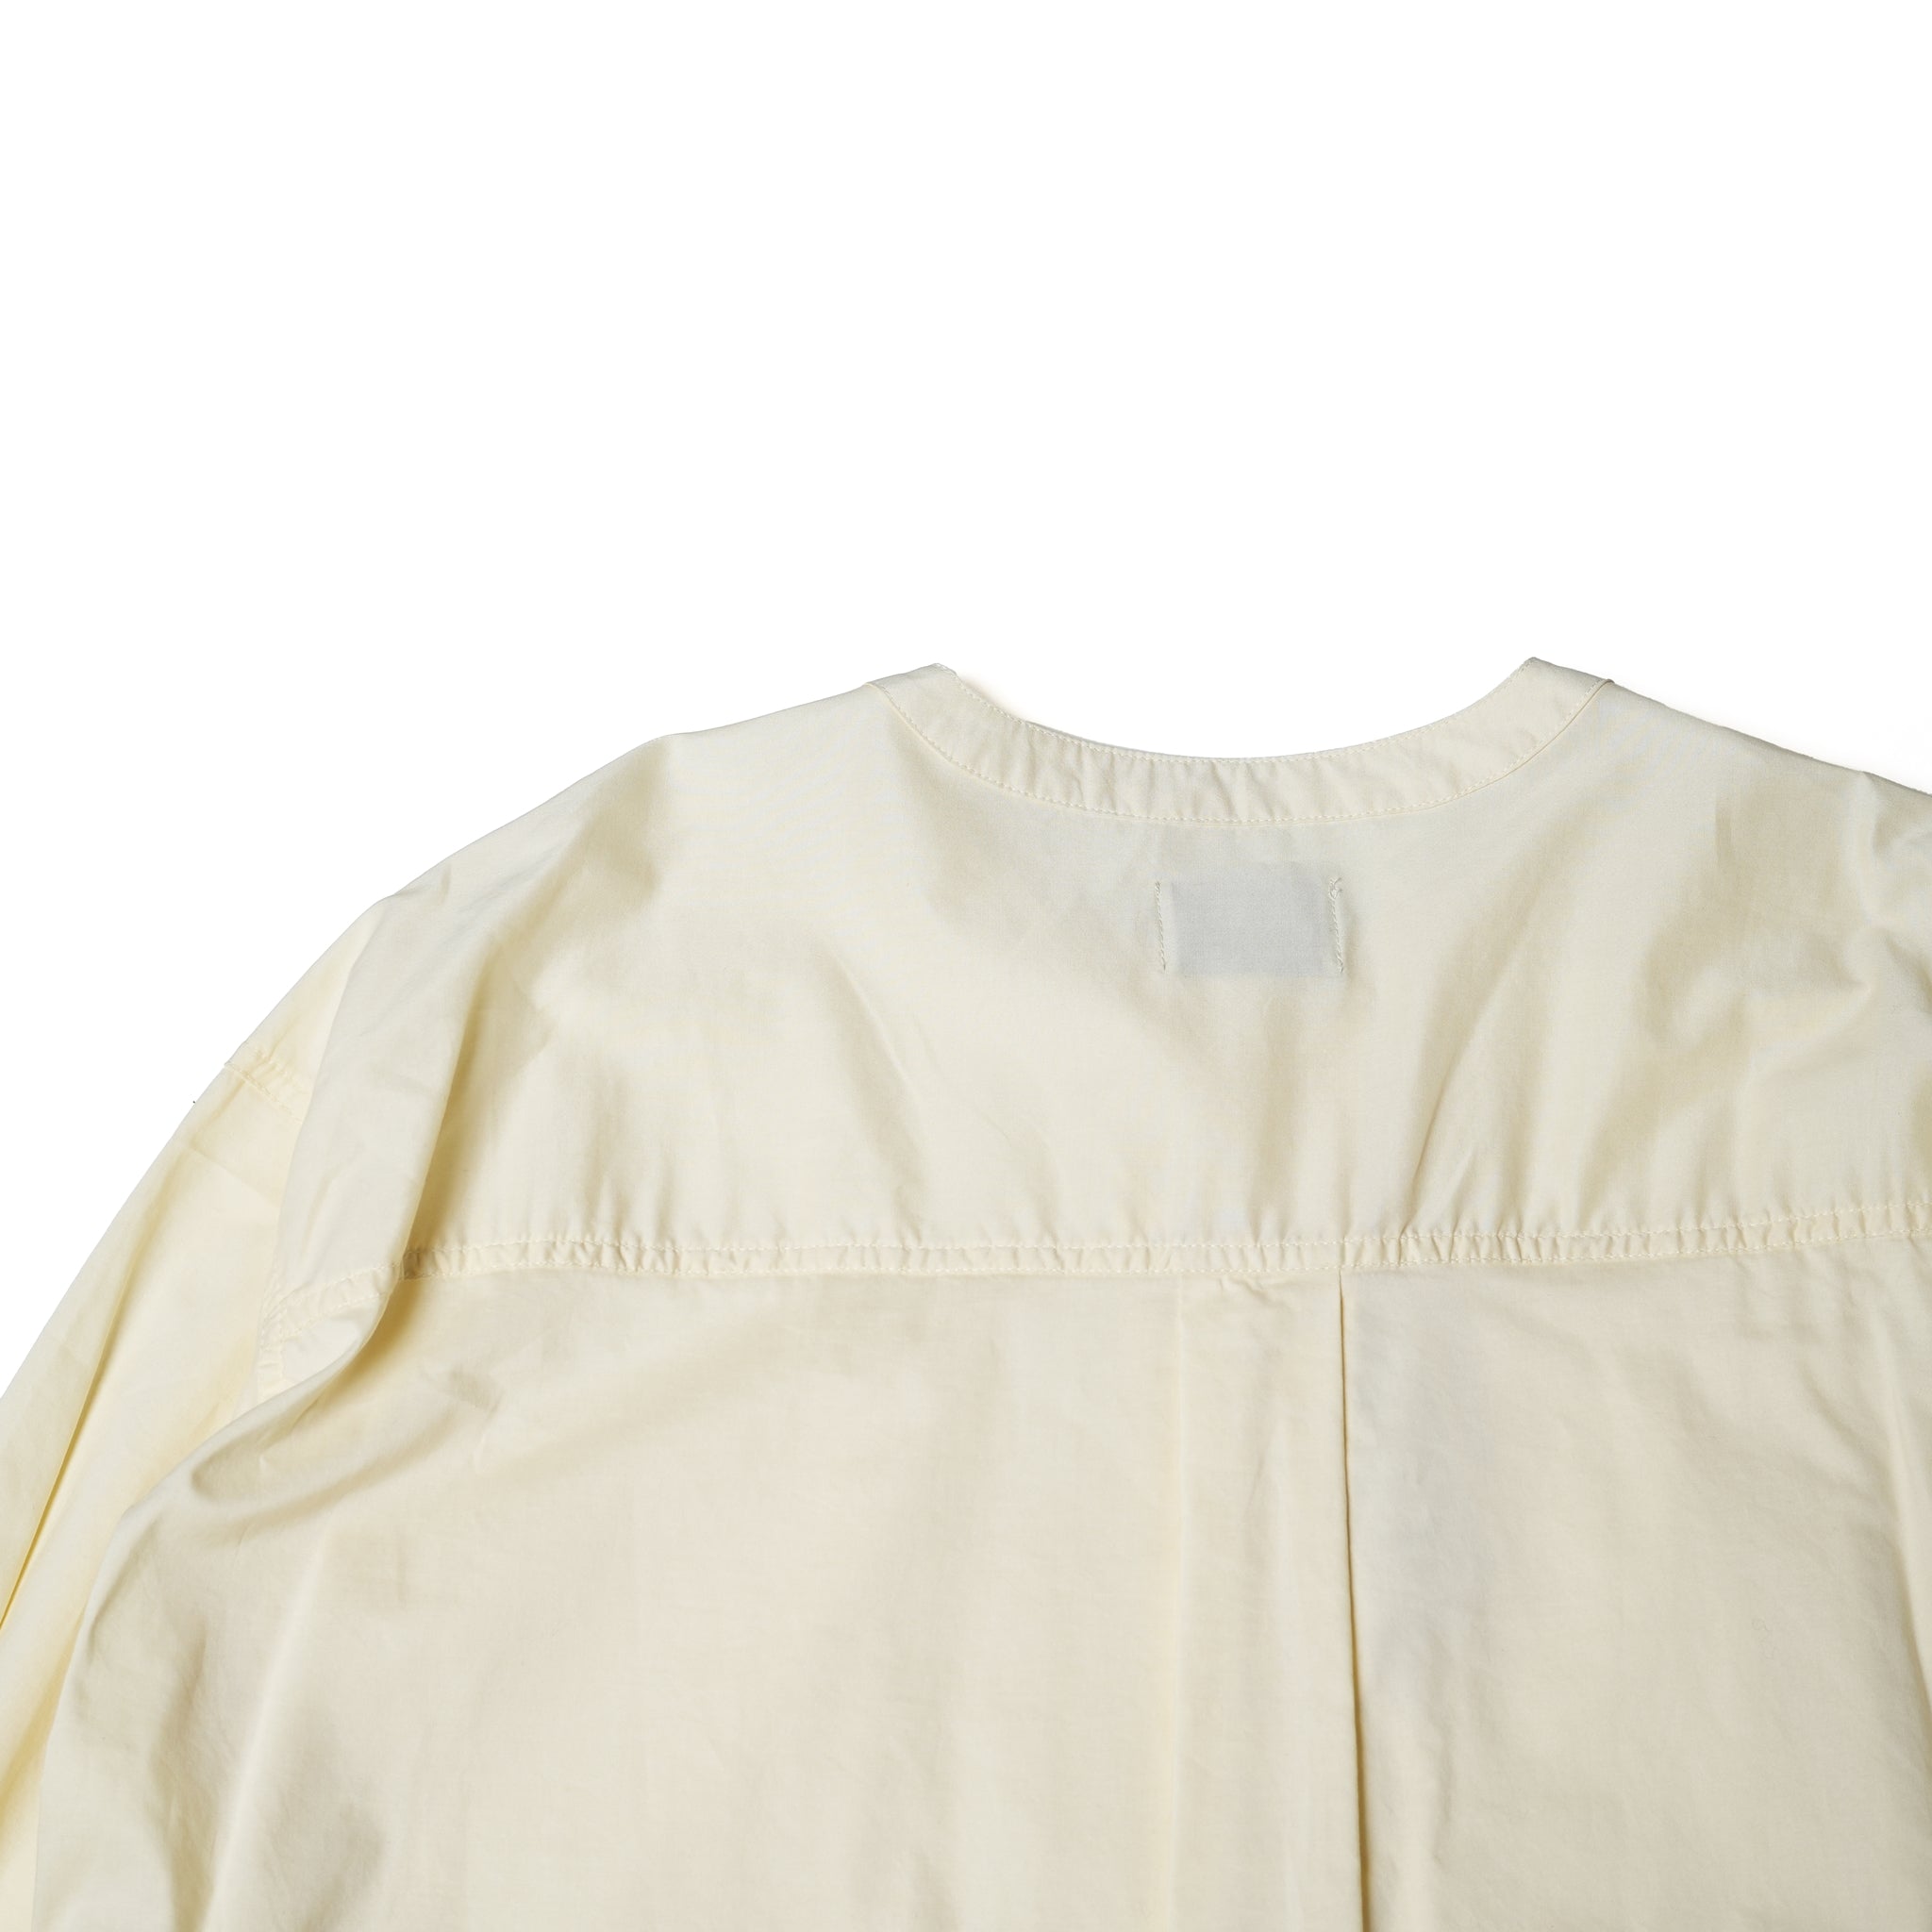 No:WTR4575 | Name:M55ポケット付きアレンジシャツ | Color:Ivory/Black | Size:Free【KHAKITO_ カキート】